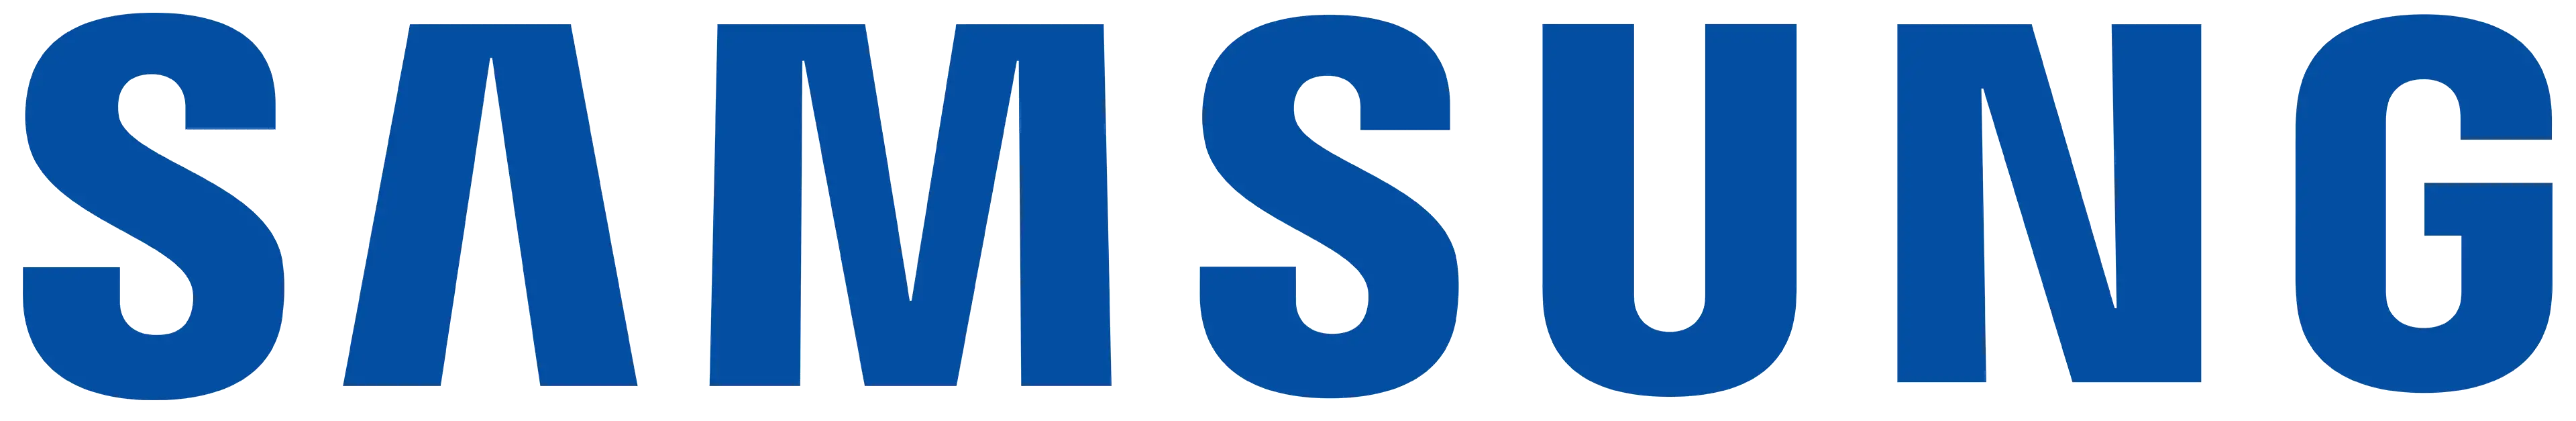 SAMSUNG - Logotipo